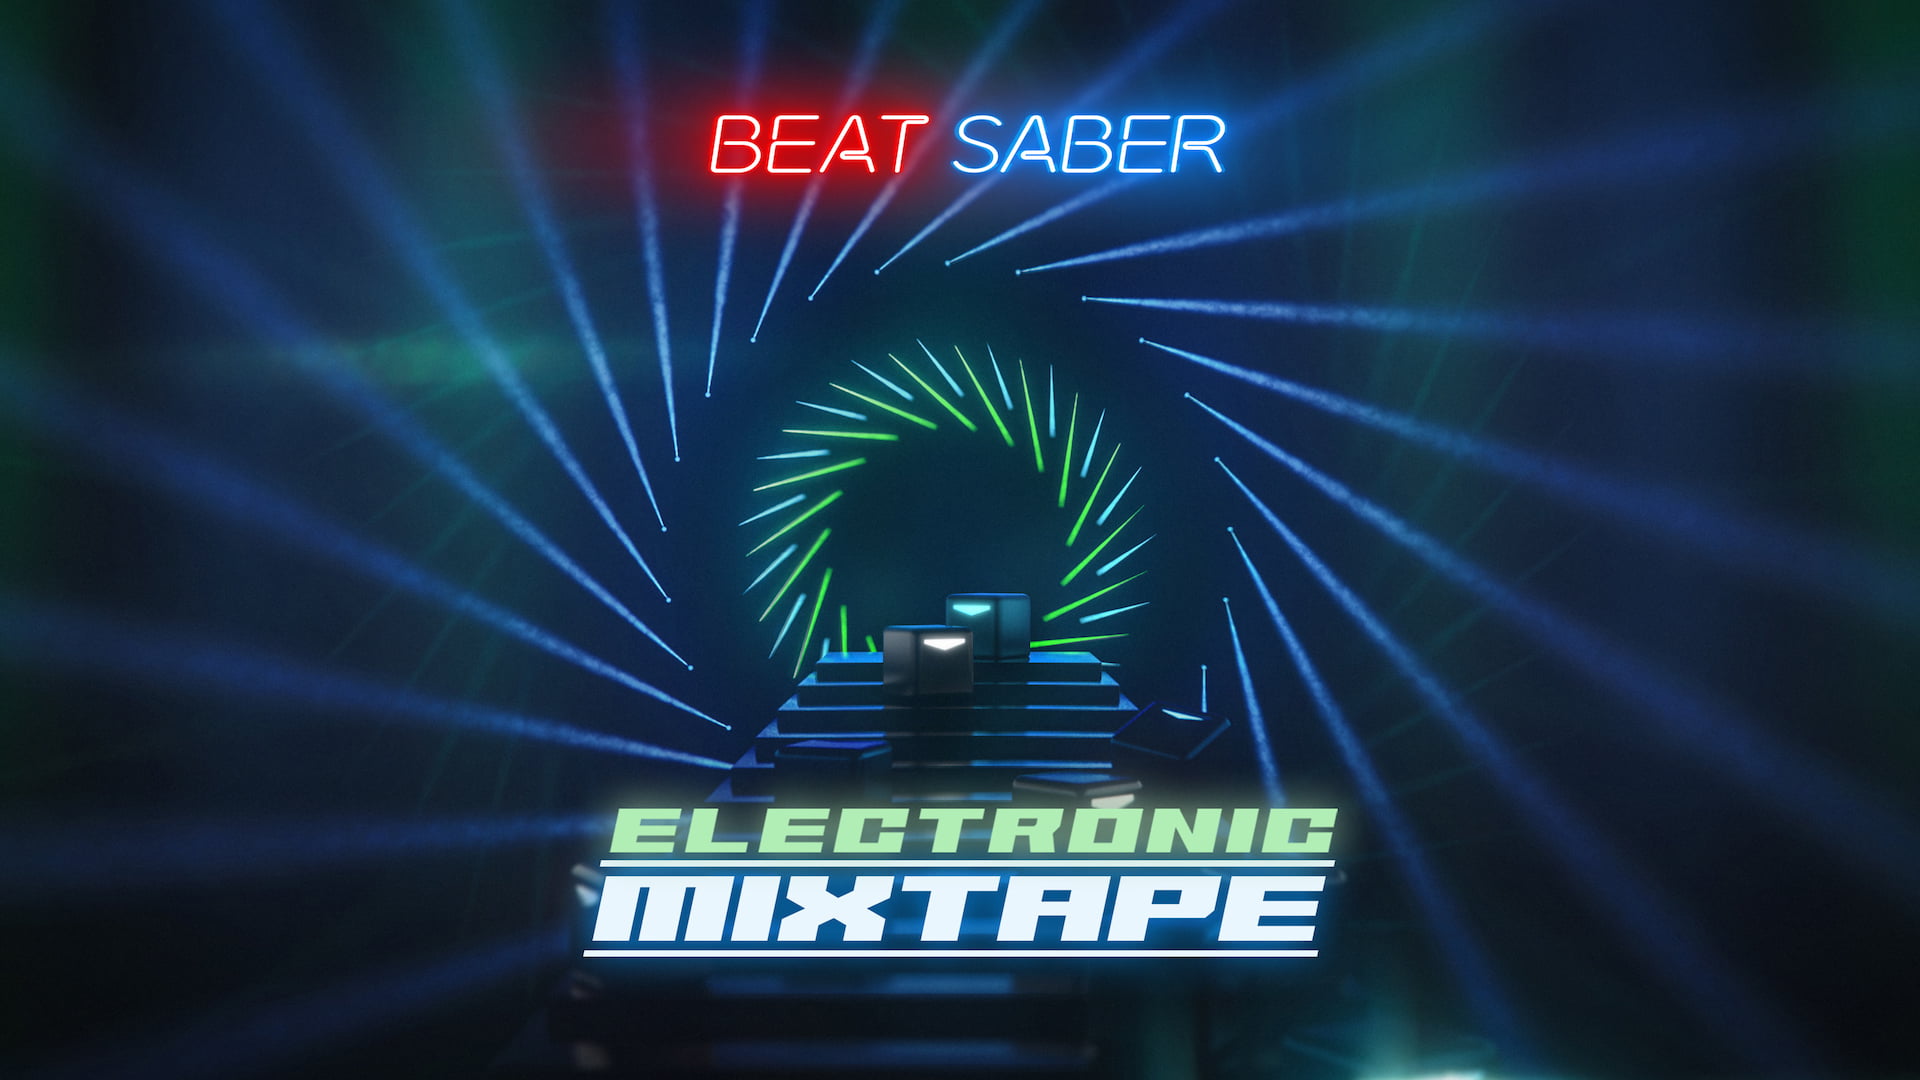 Beat Saber: “Electronic Mixtape” brings heaps of EDM classics